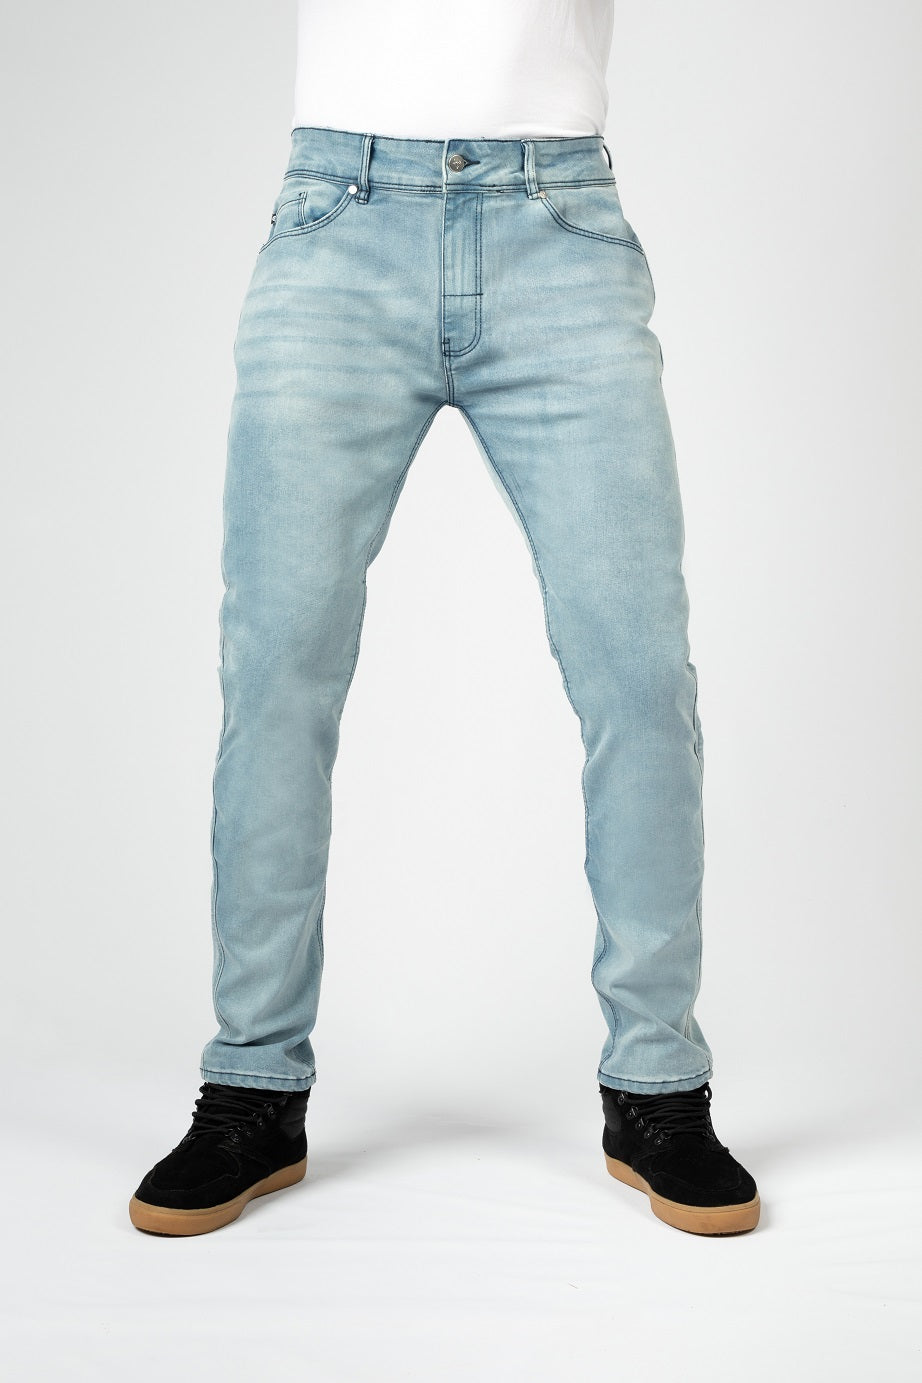 Bull-It 21 Tactical ARC Slim Men's Jeans (Regular Leg) - Blue